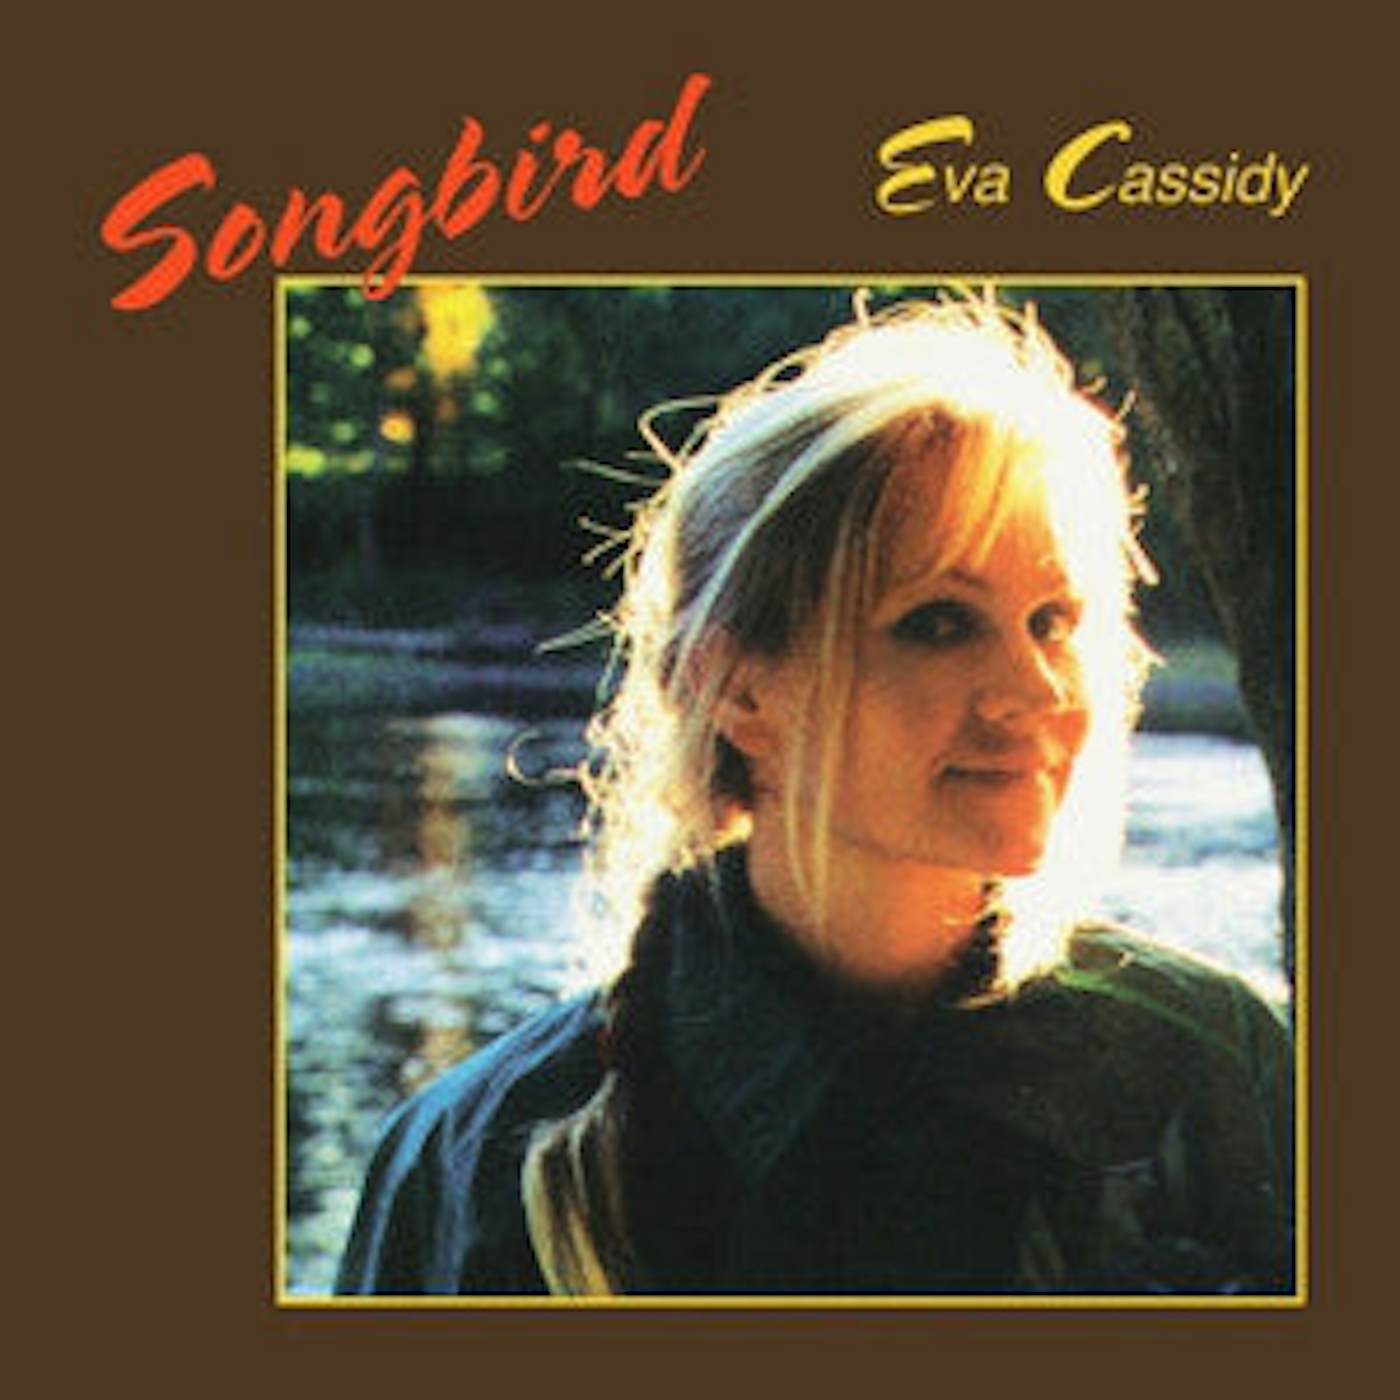 Eva Cassidy LP Vinyl Record - Songbird